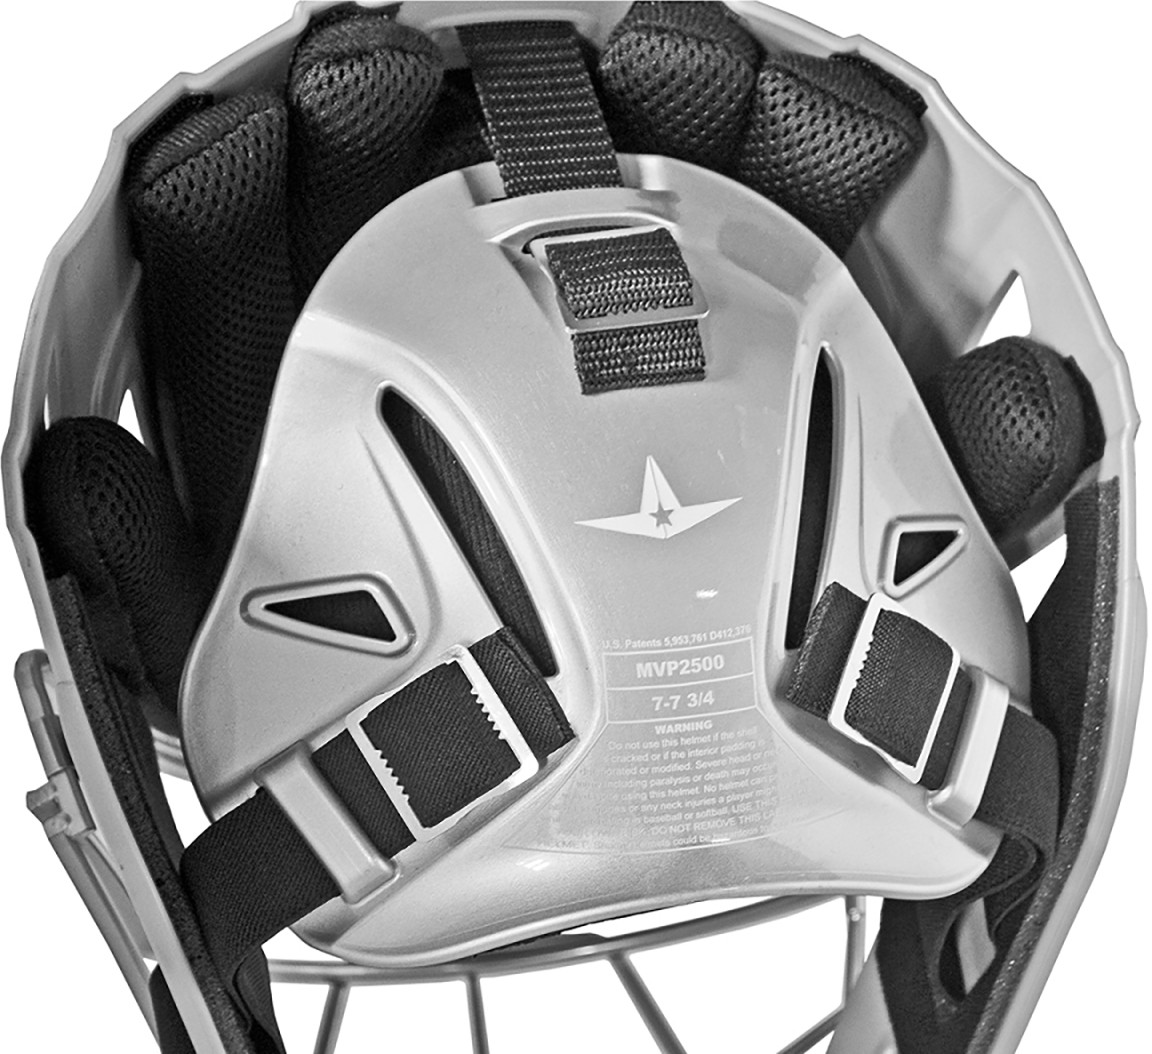 All-Star MVP2510 System 7 Catcher's Helmet, YOUTH1152 x 1054